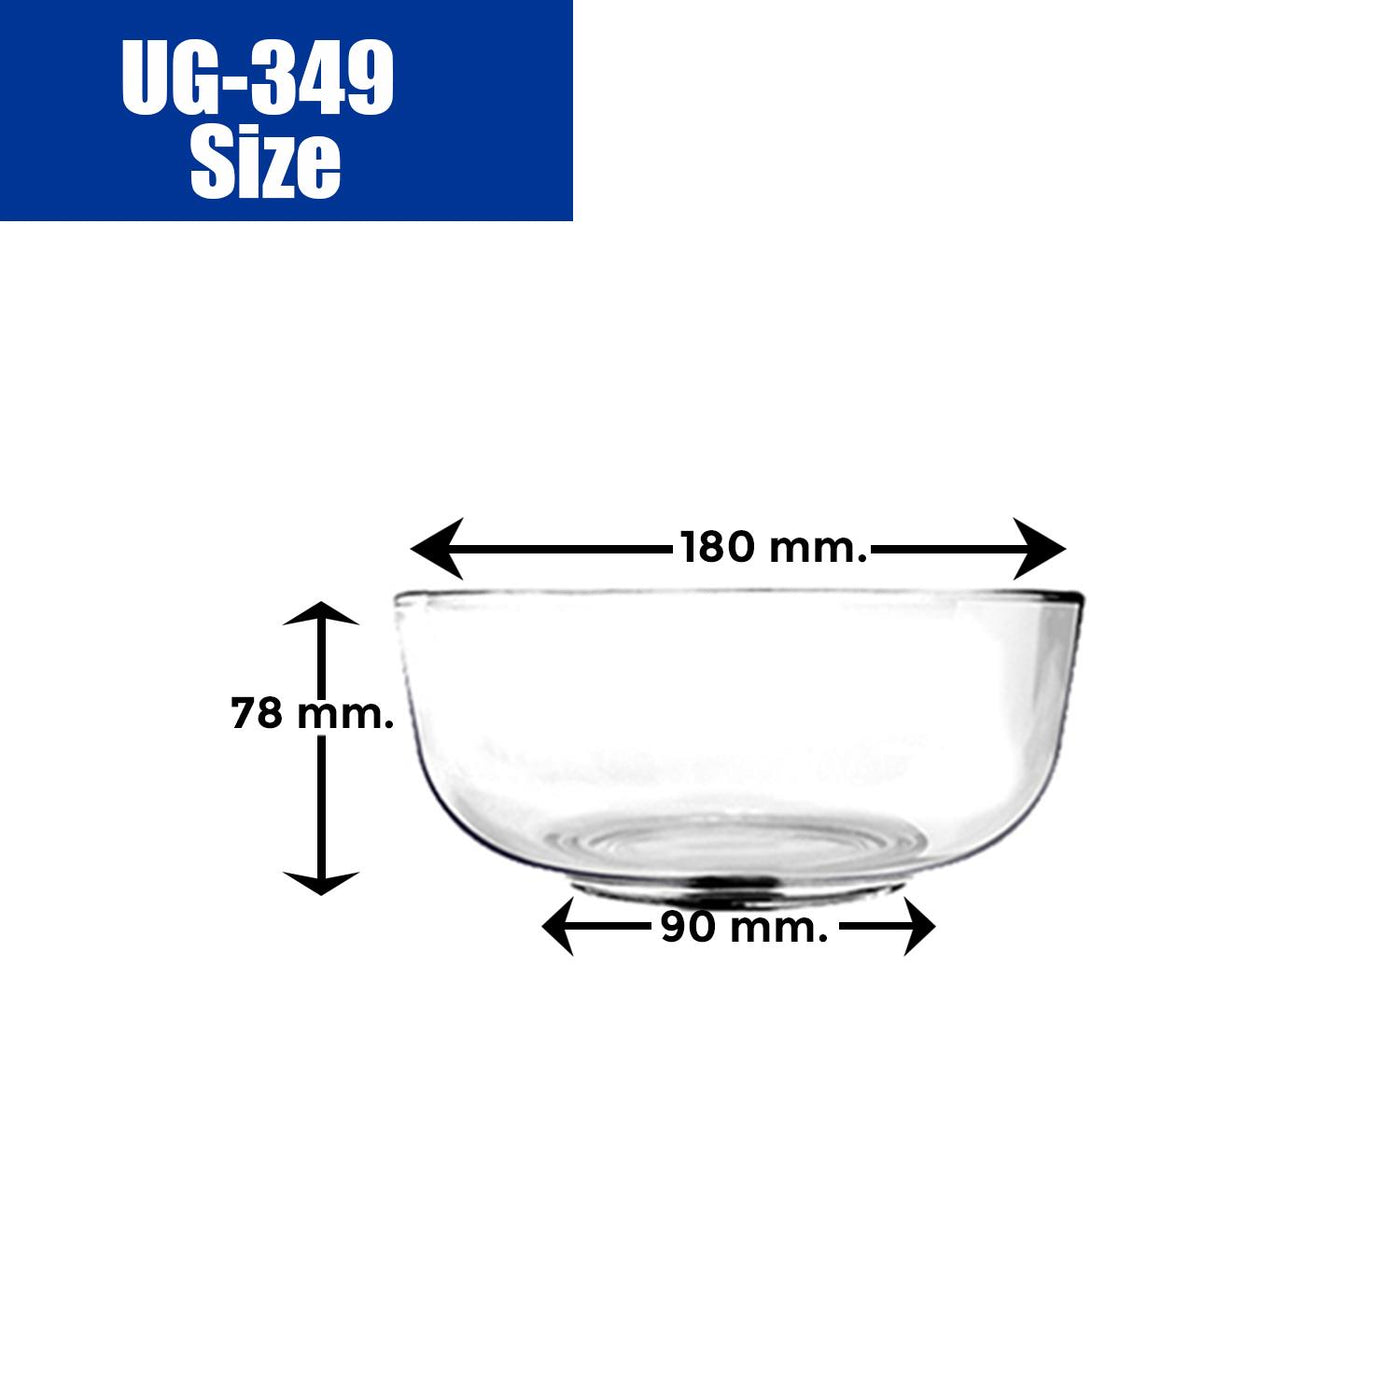 UNION GLASS Thailand Premium Clear Glass Bowl 1320 ml | 7 oz | 7" Set of 6